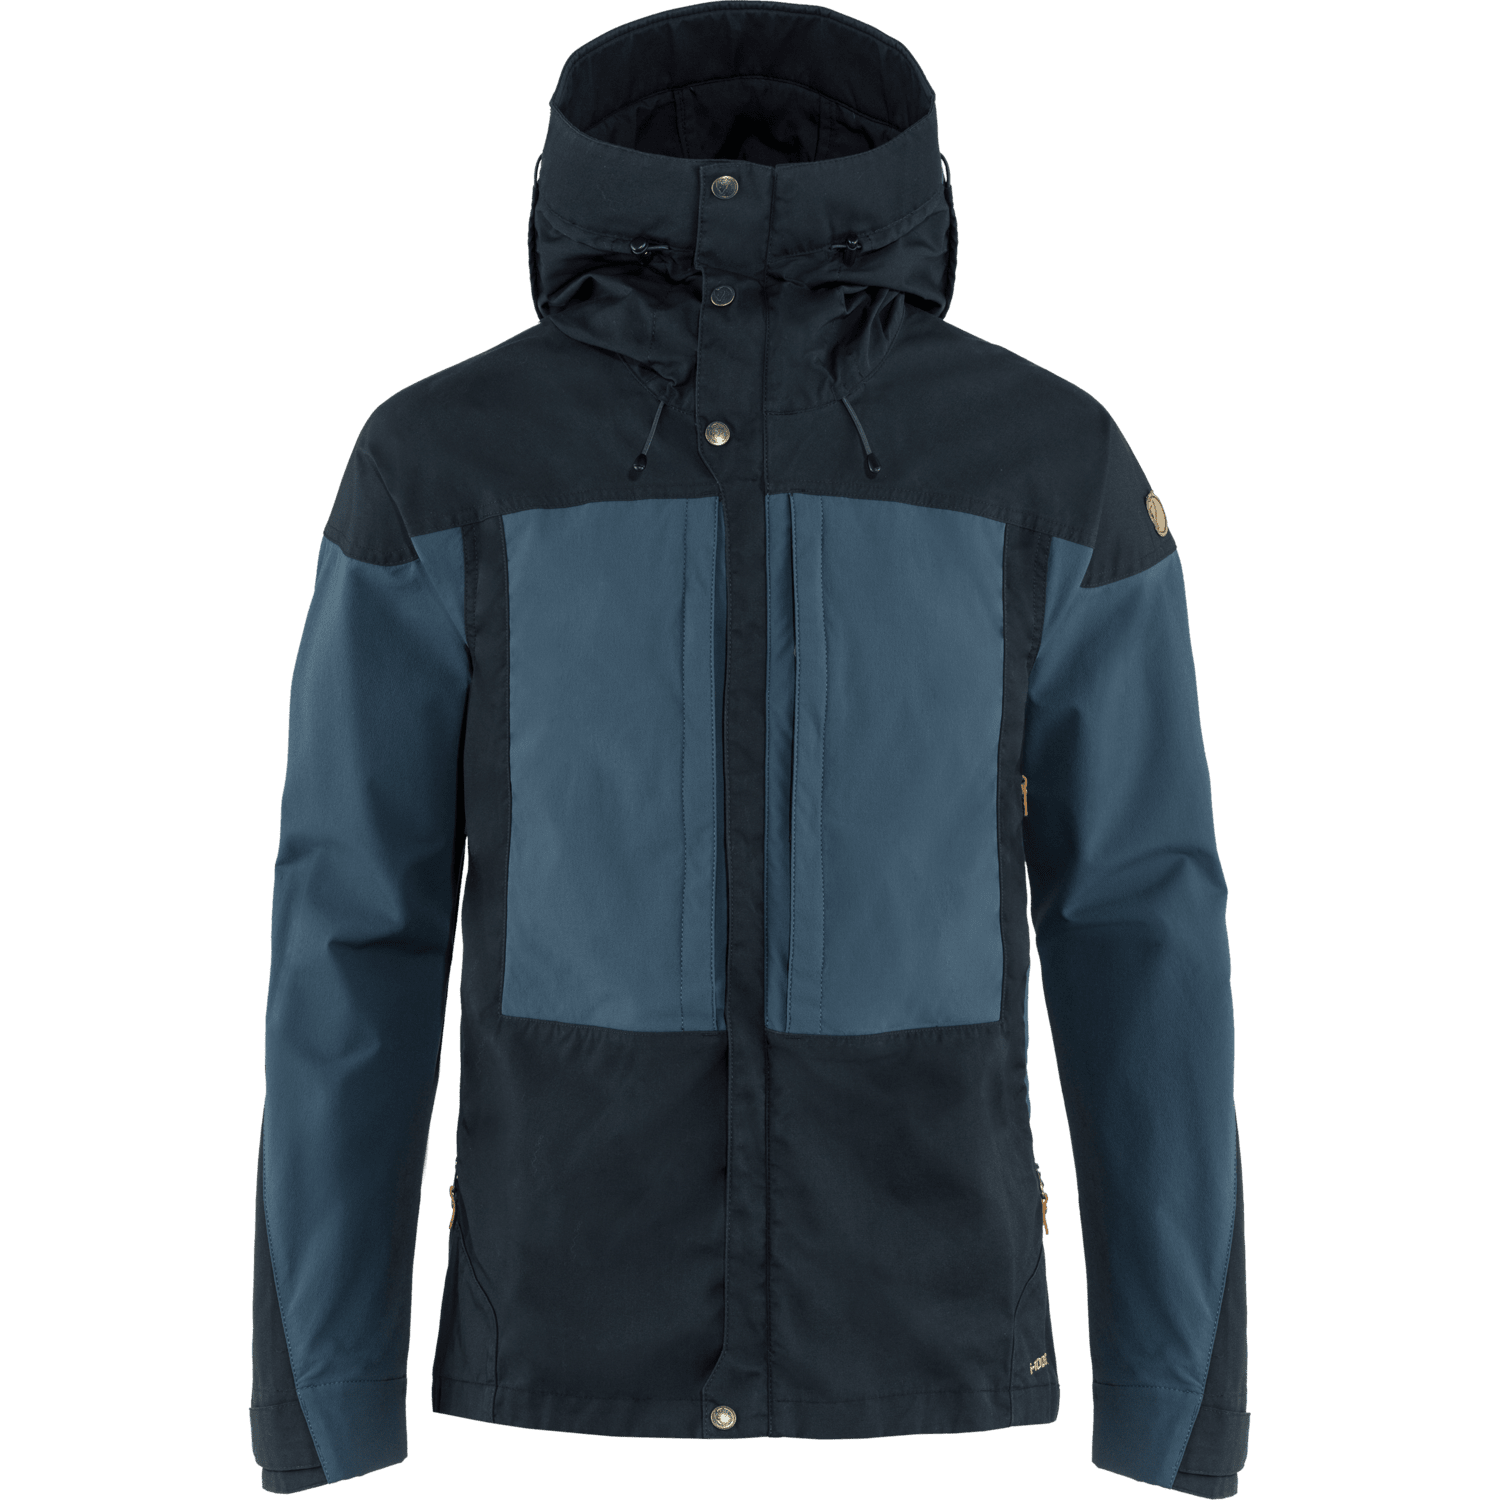 Fjällräven - M's Keb Jacket - G-1000® - Recycled Polyester & Organic Cotton - Weekendbee - sustainable sportswear